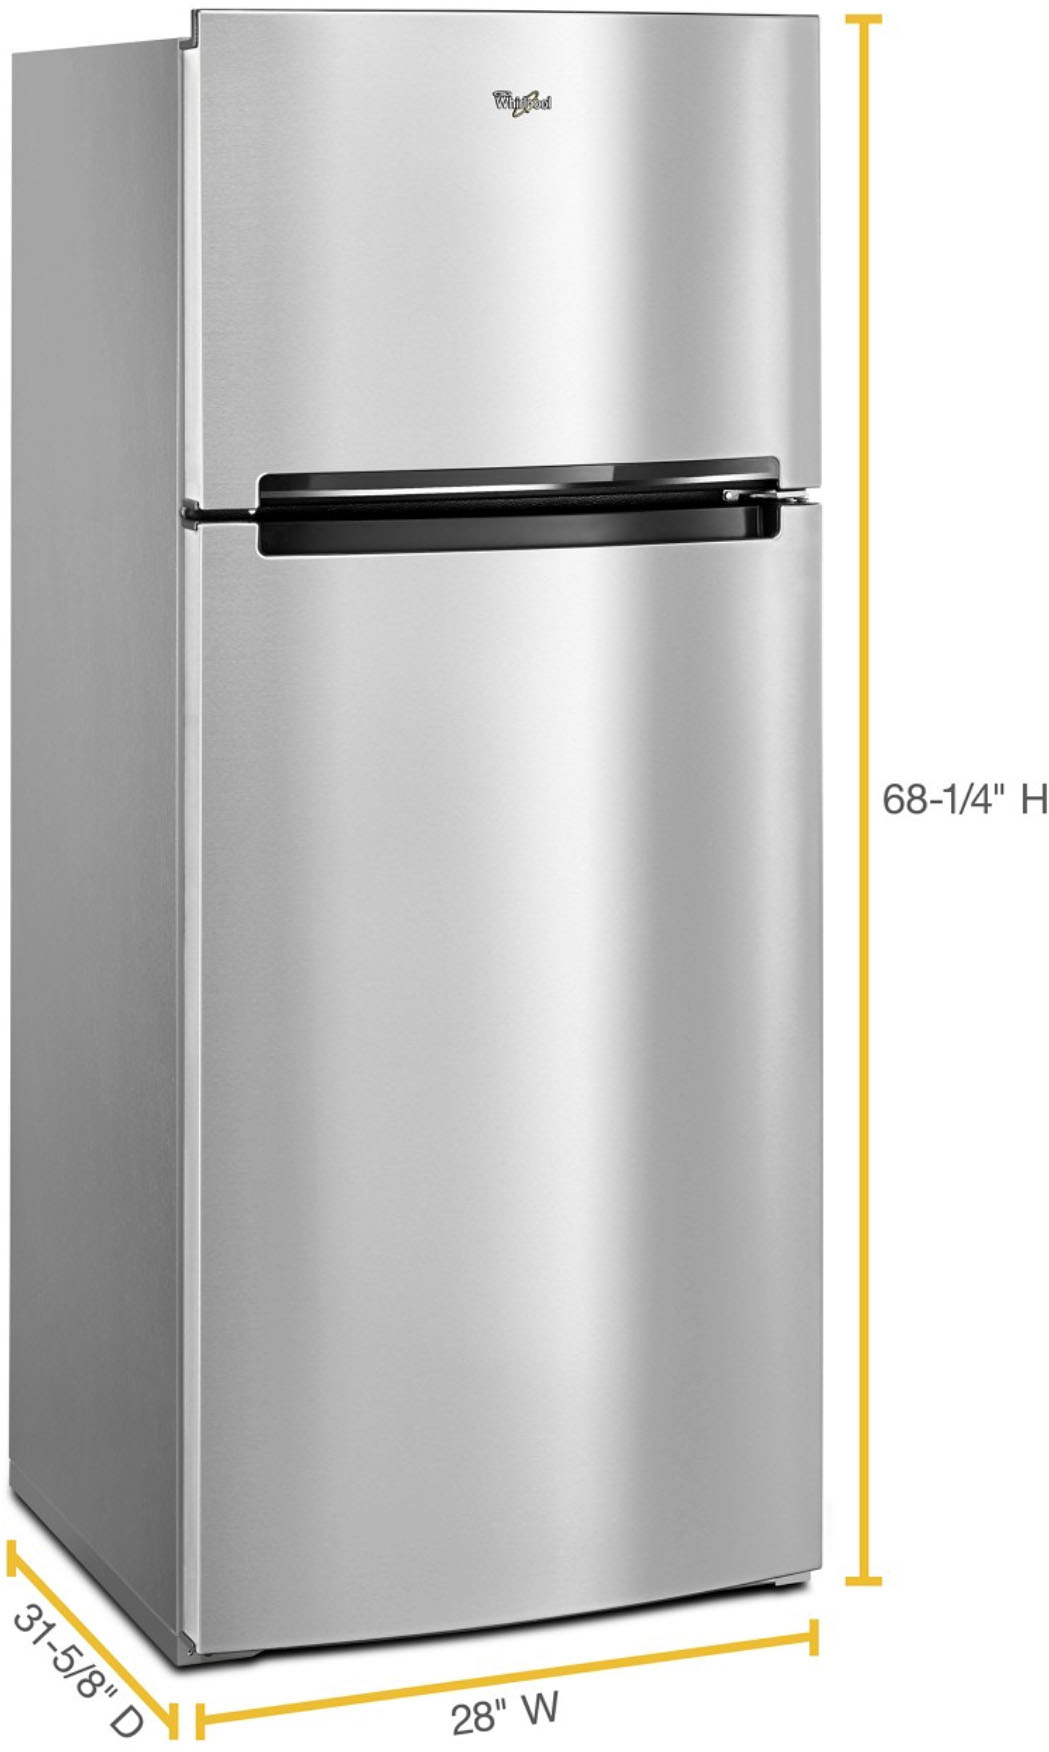 Whirlpool 17.7 Cu Ft Top Freezer Refrigerator Monochromatic Stainless Steel